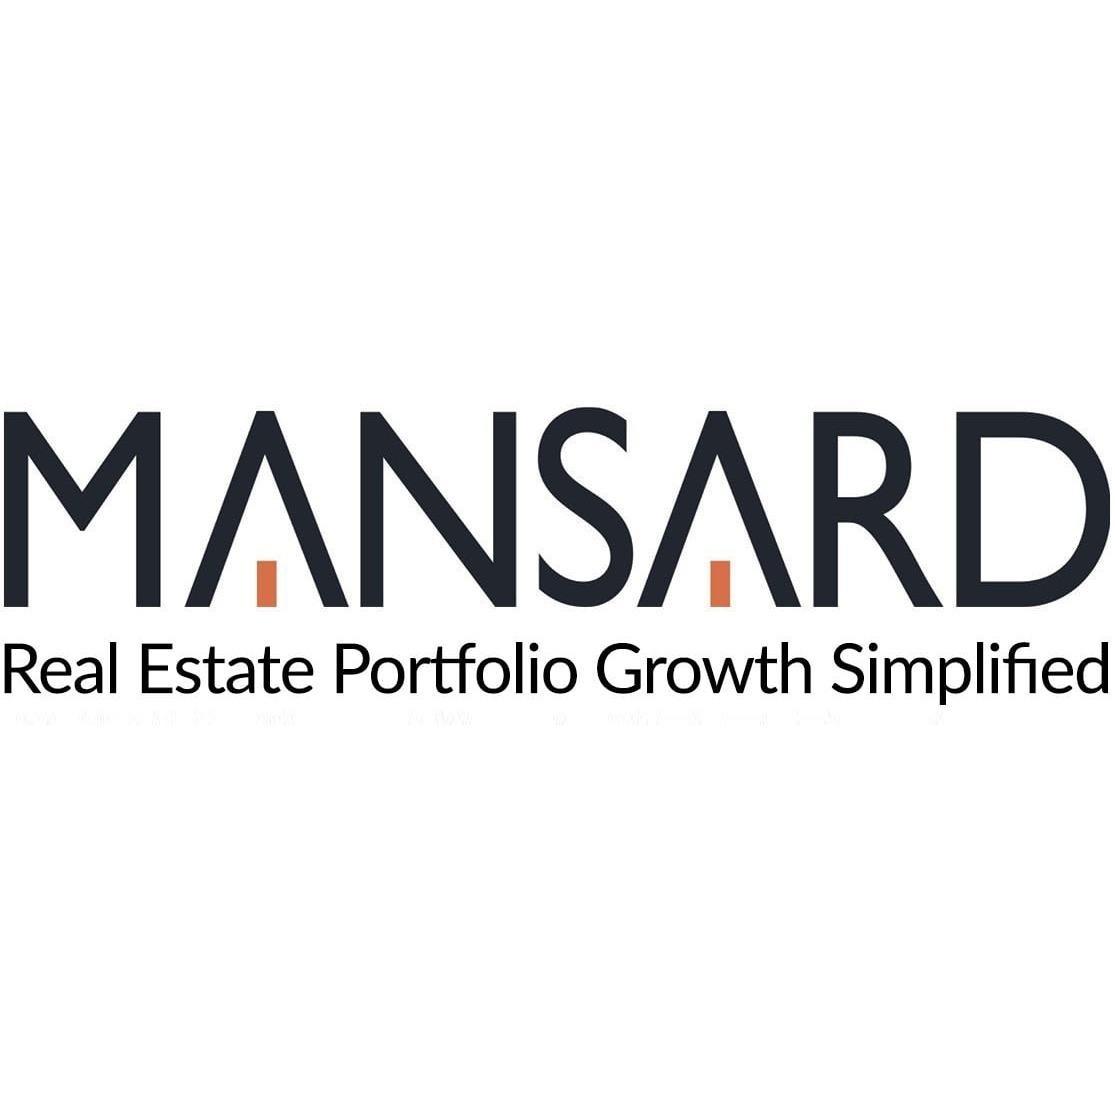 MANSARD Commercial Real Estate Property Sales Photo